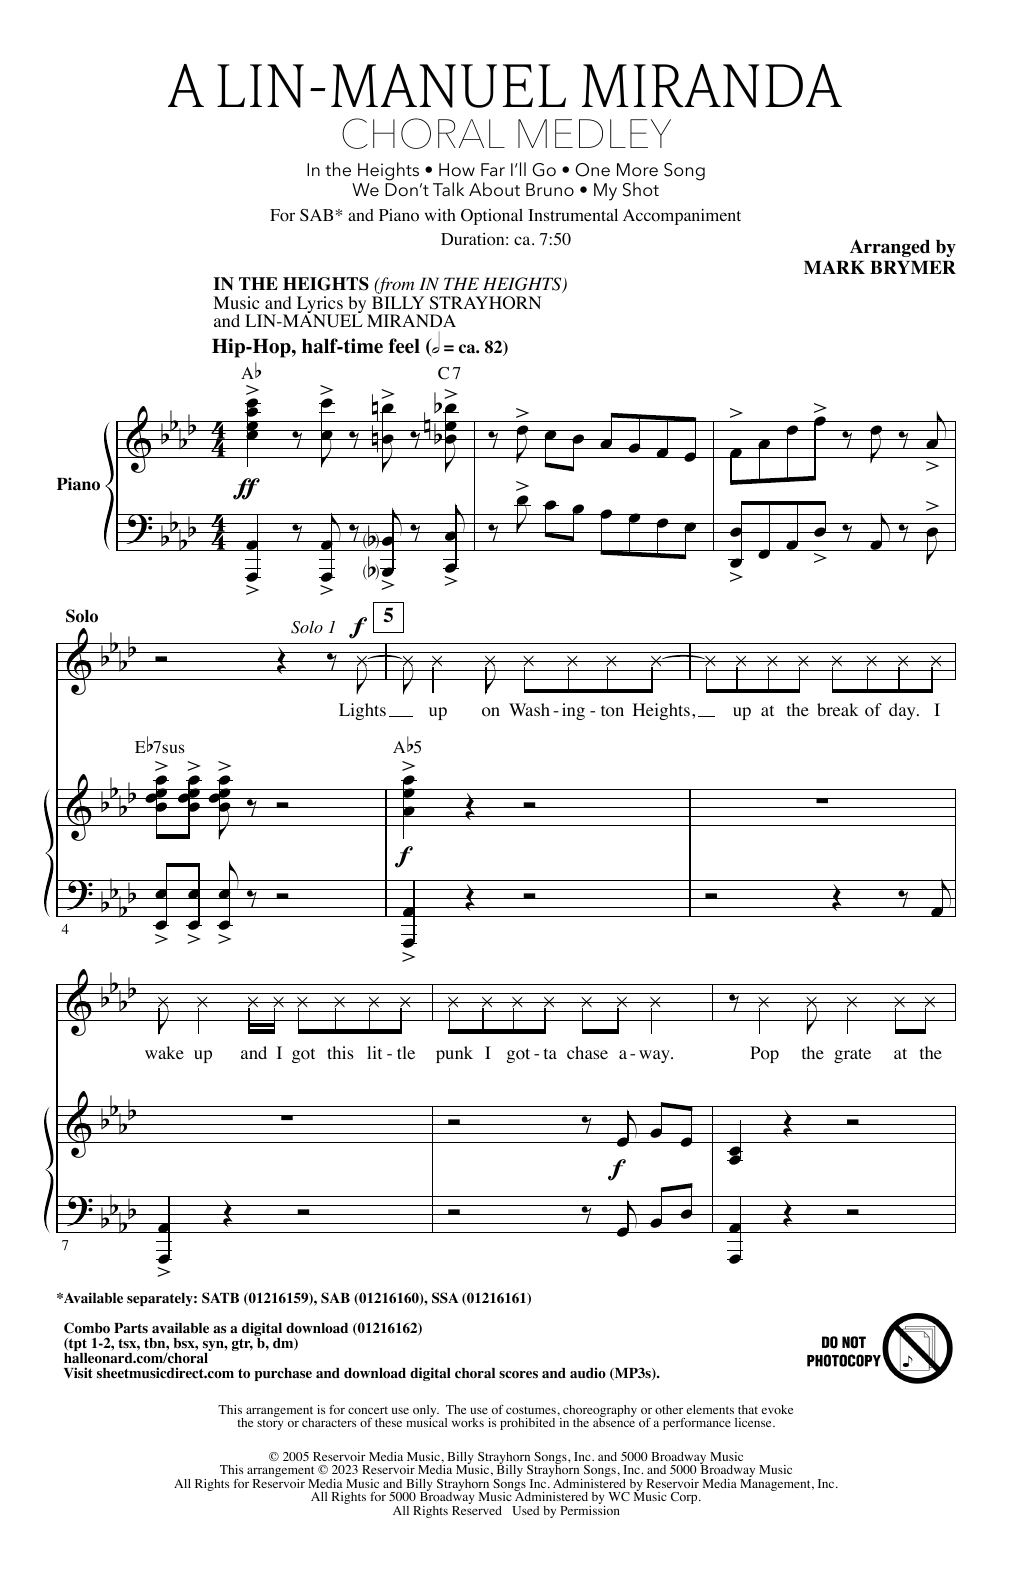 Download Lin-Manuel Miranda A Lin-Manuel Miranda Choral Medley (arr. Mark Brymer) Sheet Music and learn how to play SSA Choir PDF digital score in minutes